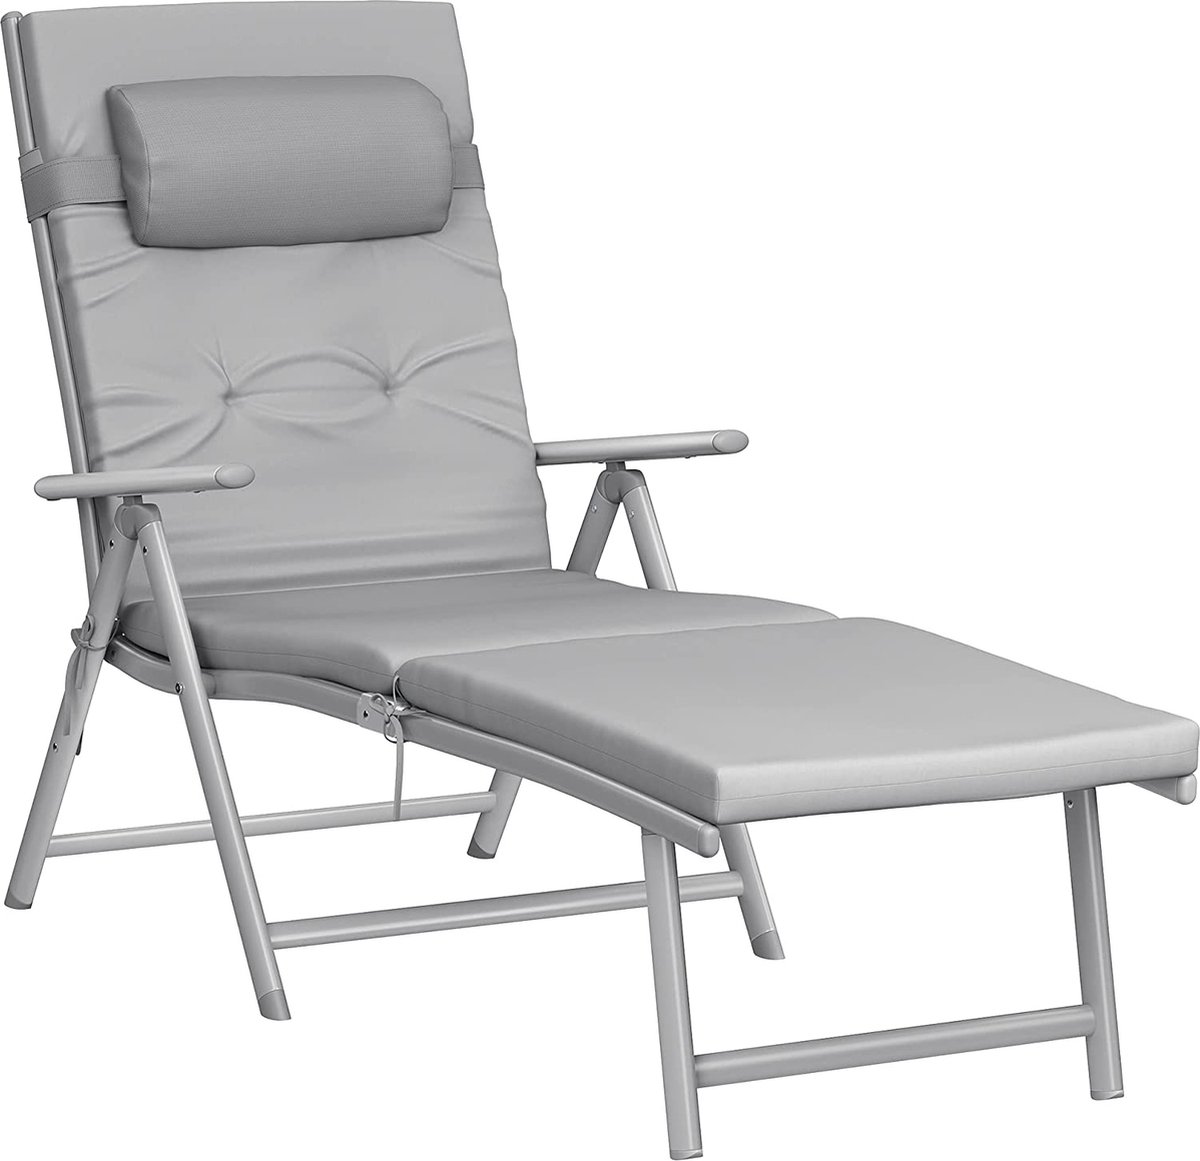 The Mash - Ligstoel, inklapbaar, ligstoel met 6 cm dikke matras, afneembaar hoofdkussen, van roestvrij aluminium, ademend, comfortabel, verstelbaar, tot 150 kg belastbaar, grijs